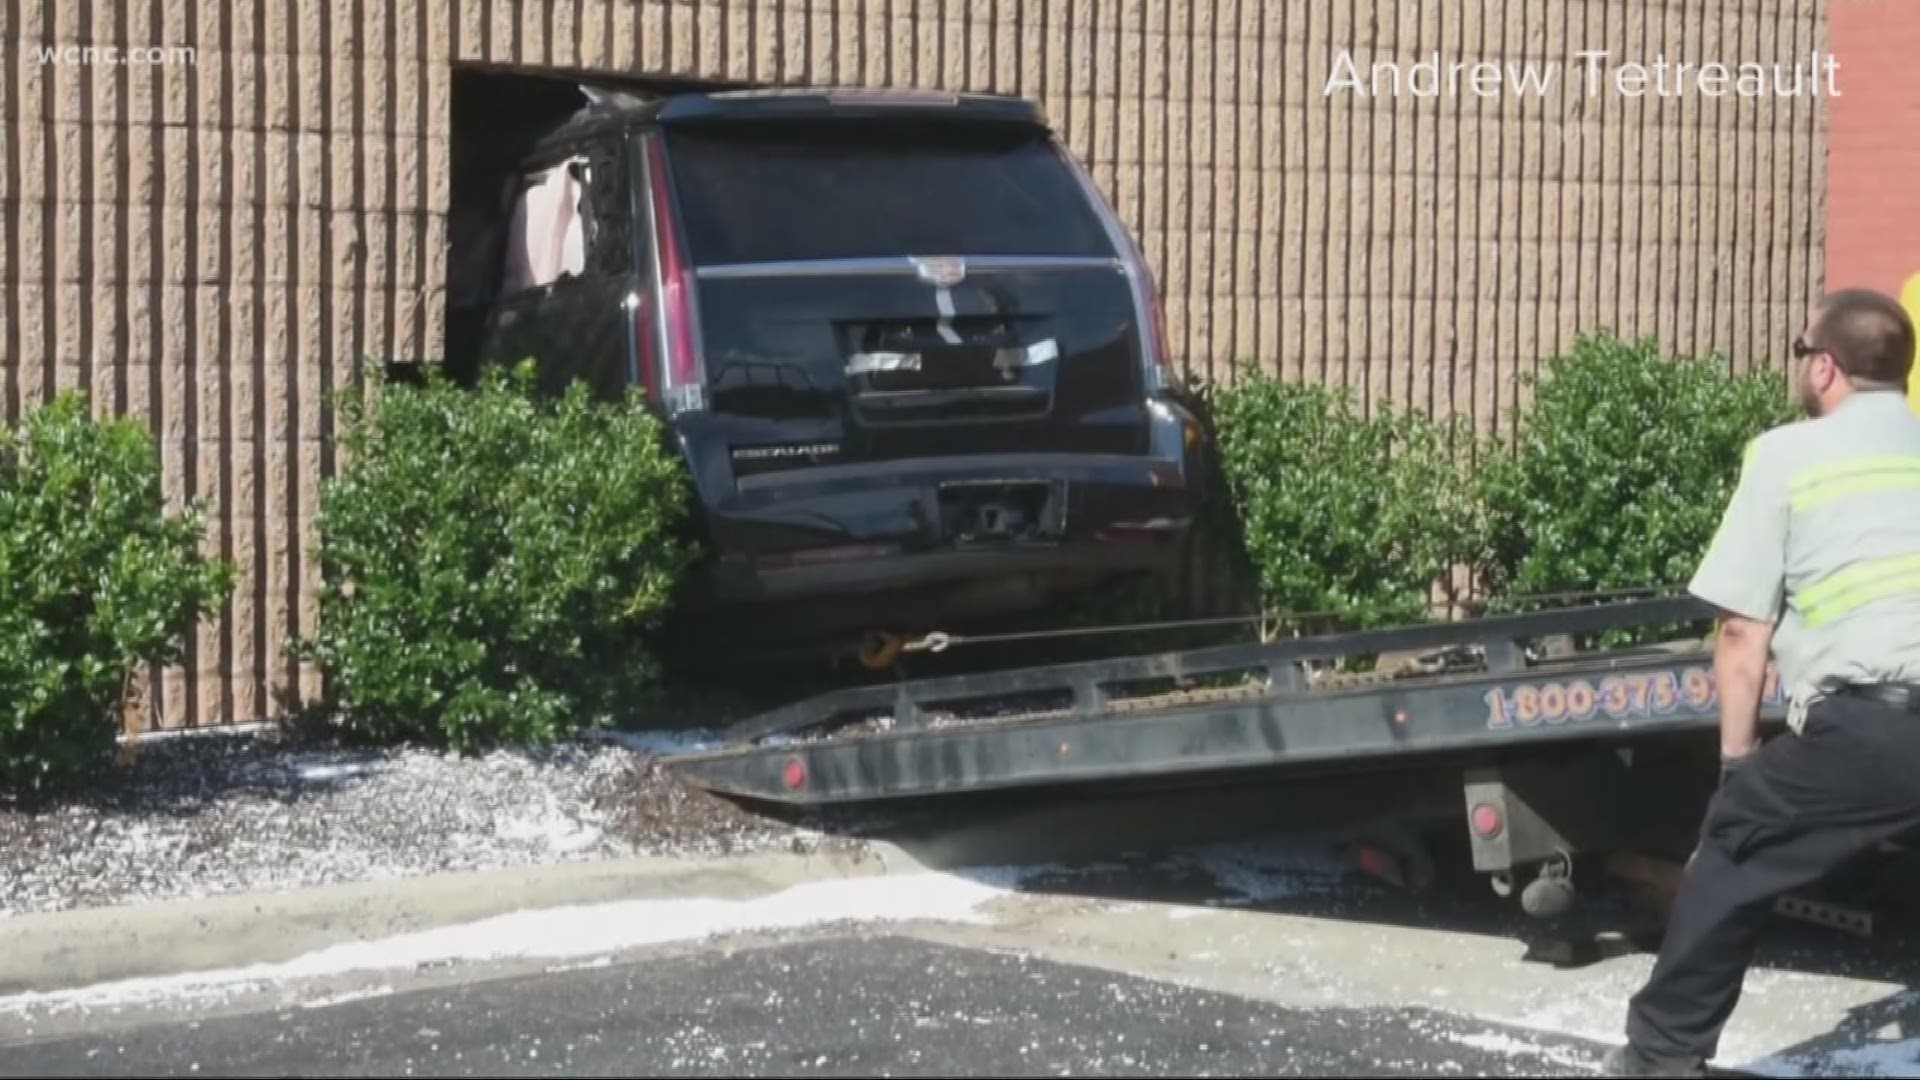 SUV plows through Pineville building